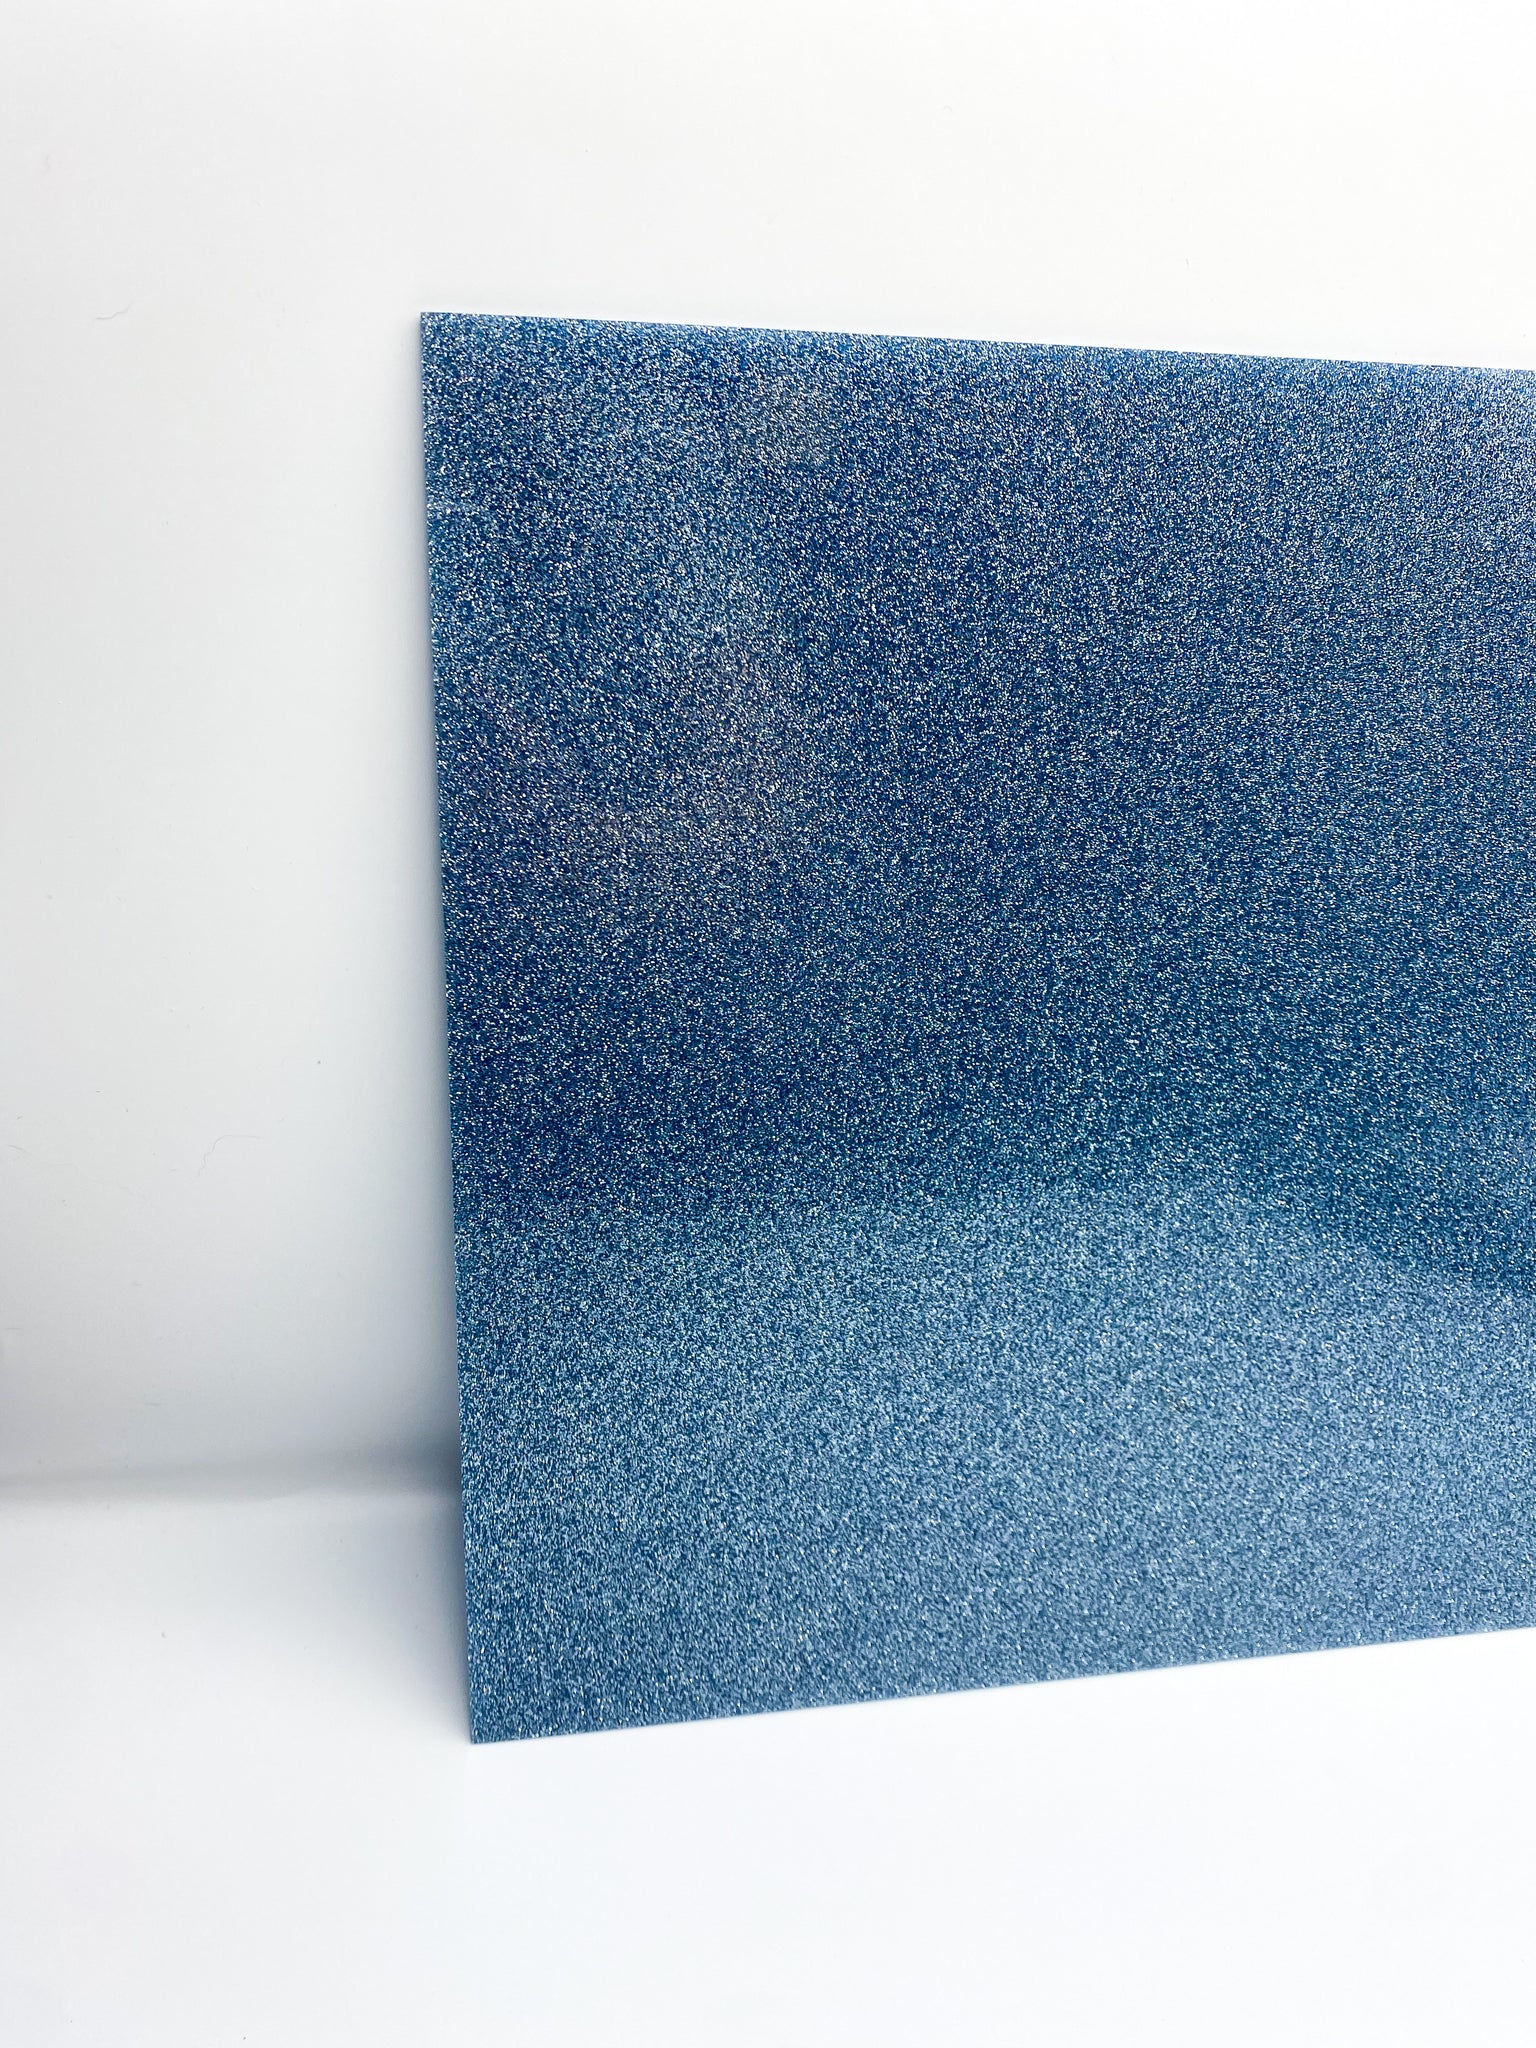 Incudo Blue Transparent Glitter Acrylic Sheet 